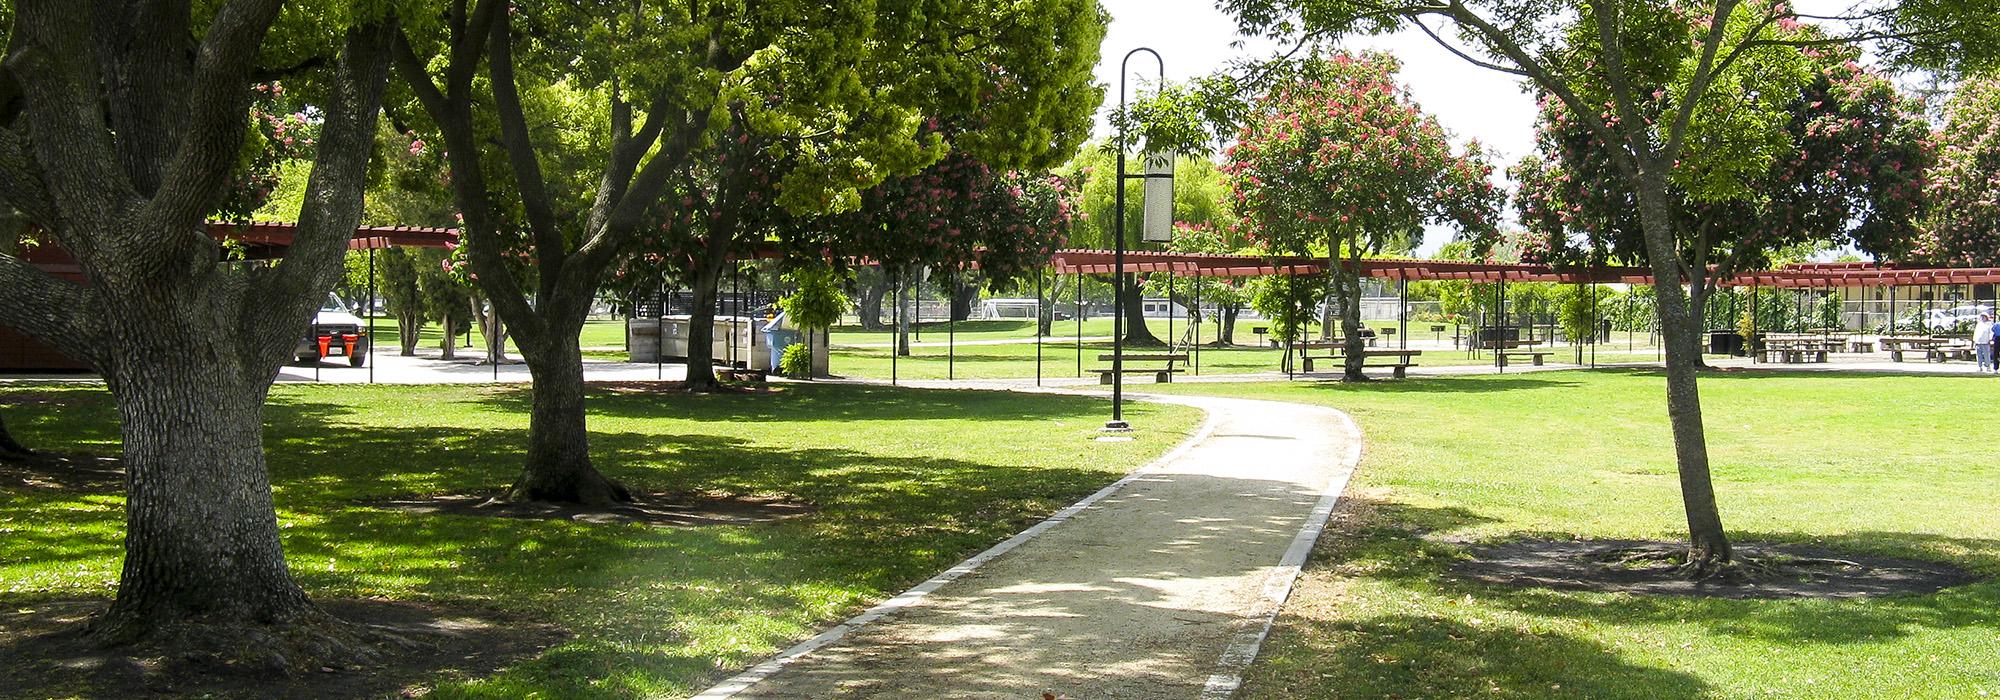 Mitchell Park, Palo Alto, CA